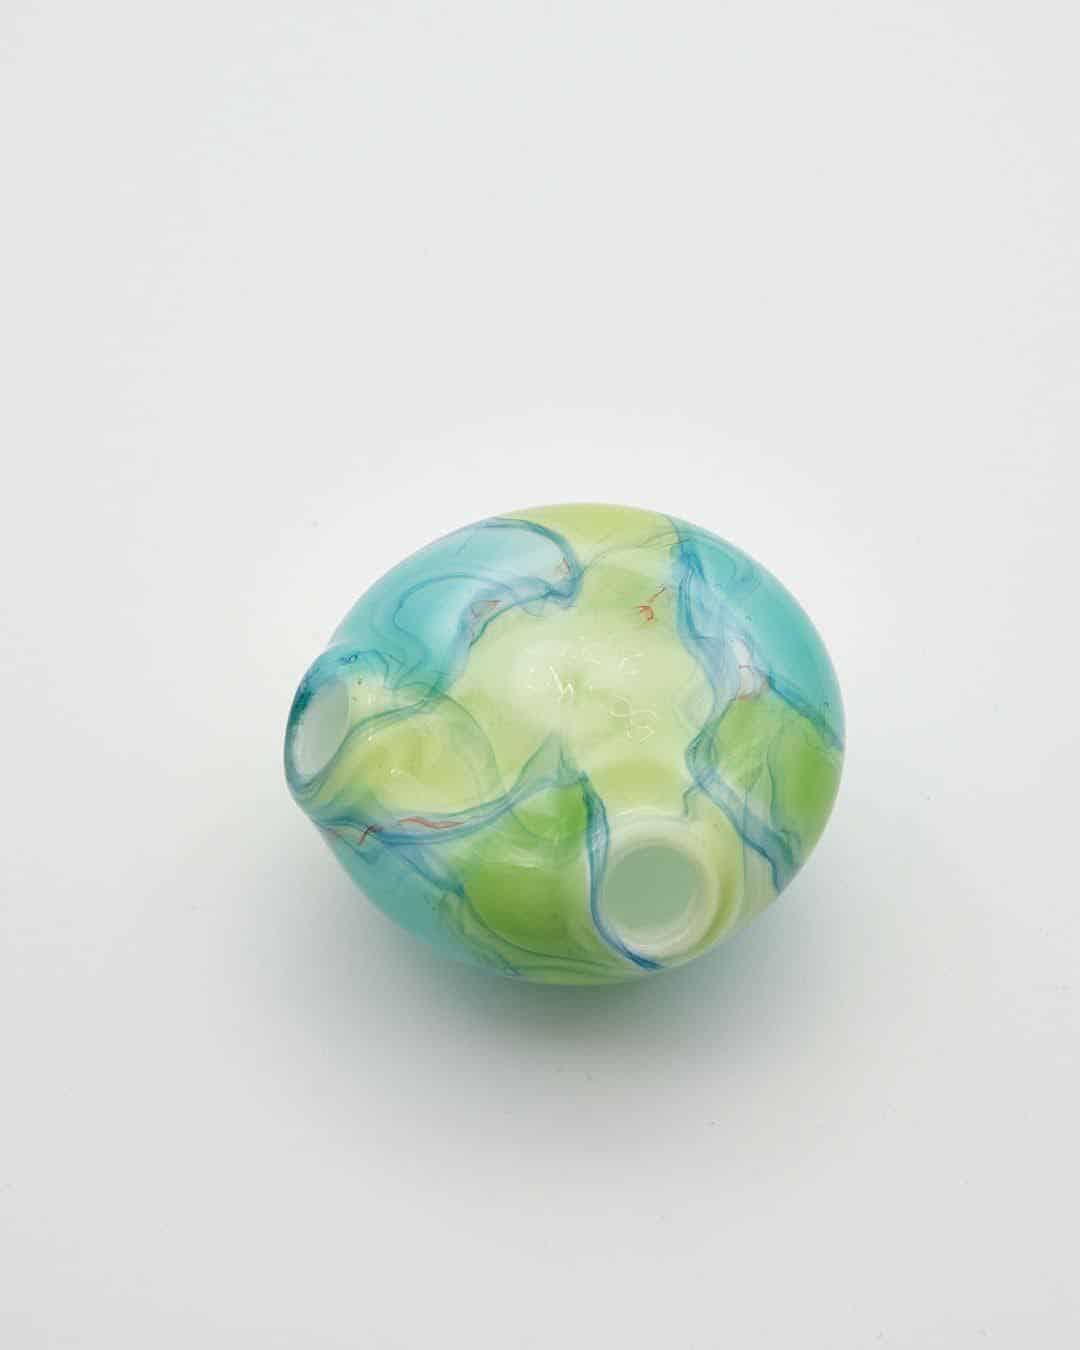 hand-blown glass pendant - Disc Pendant by Scomo